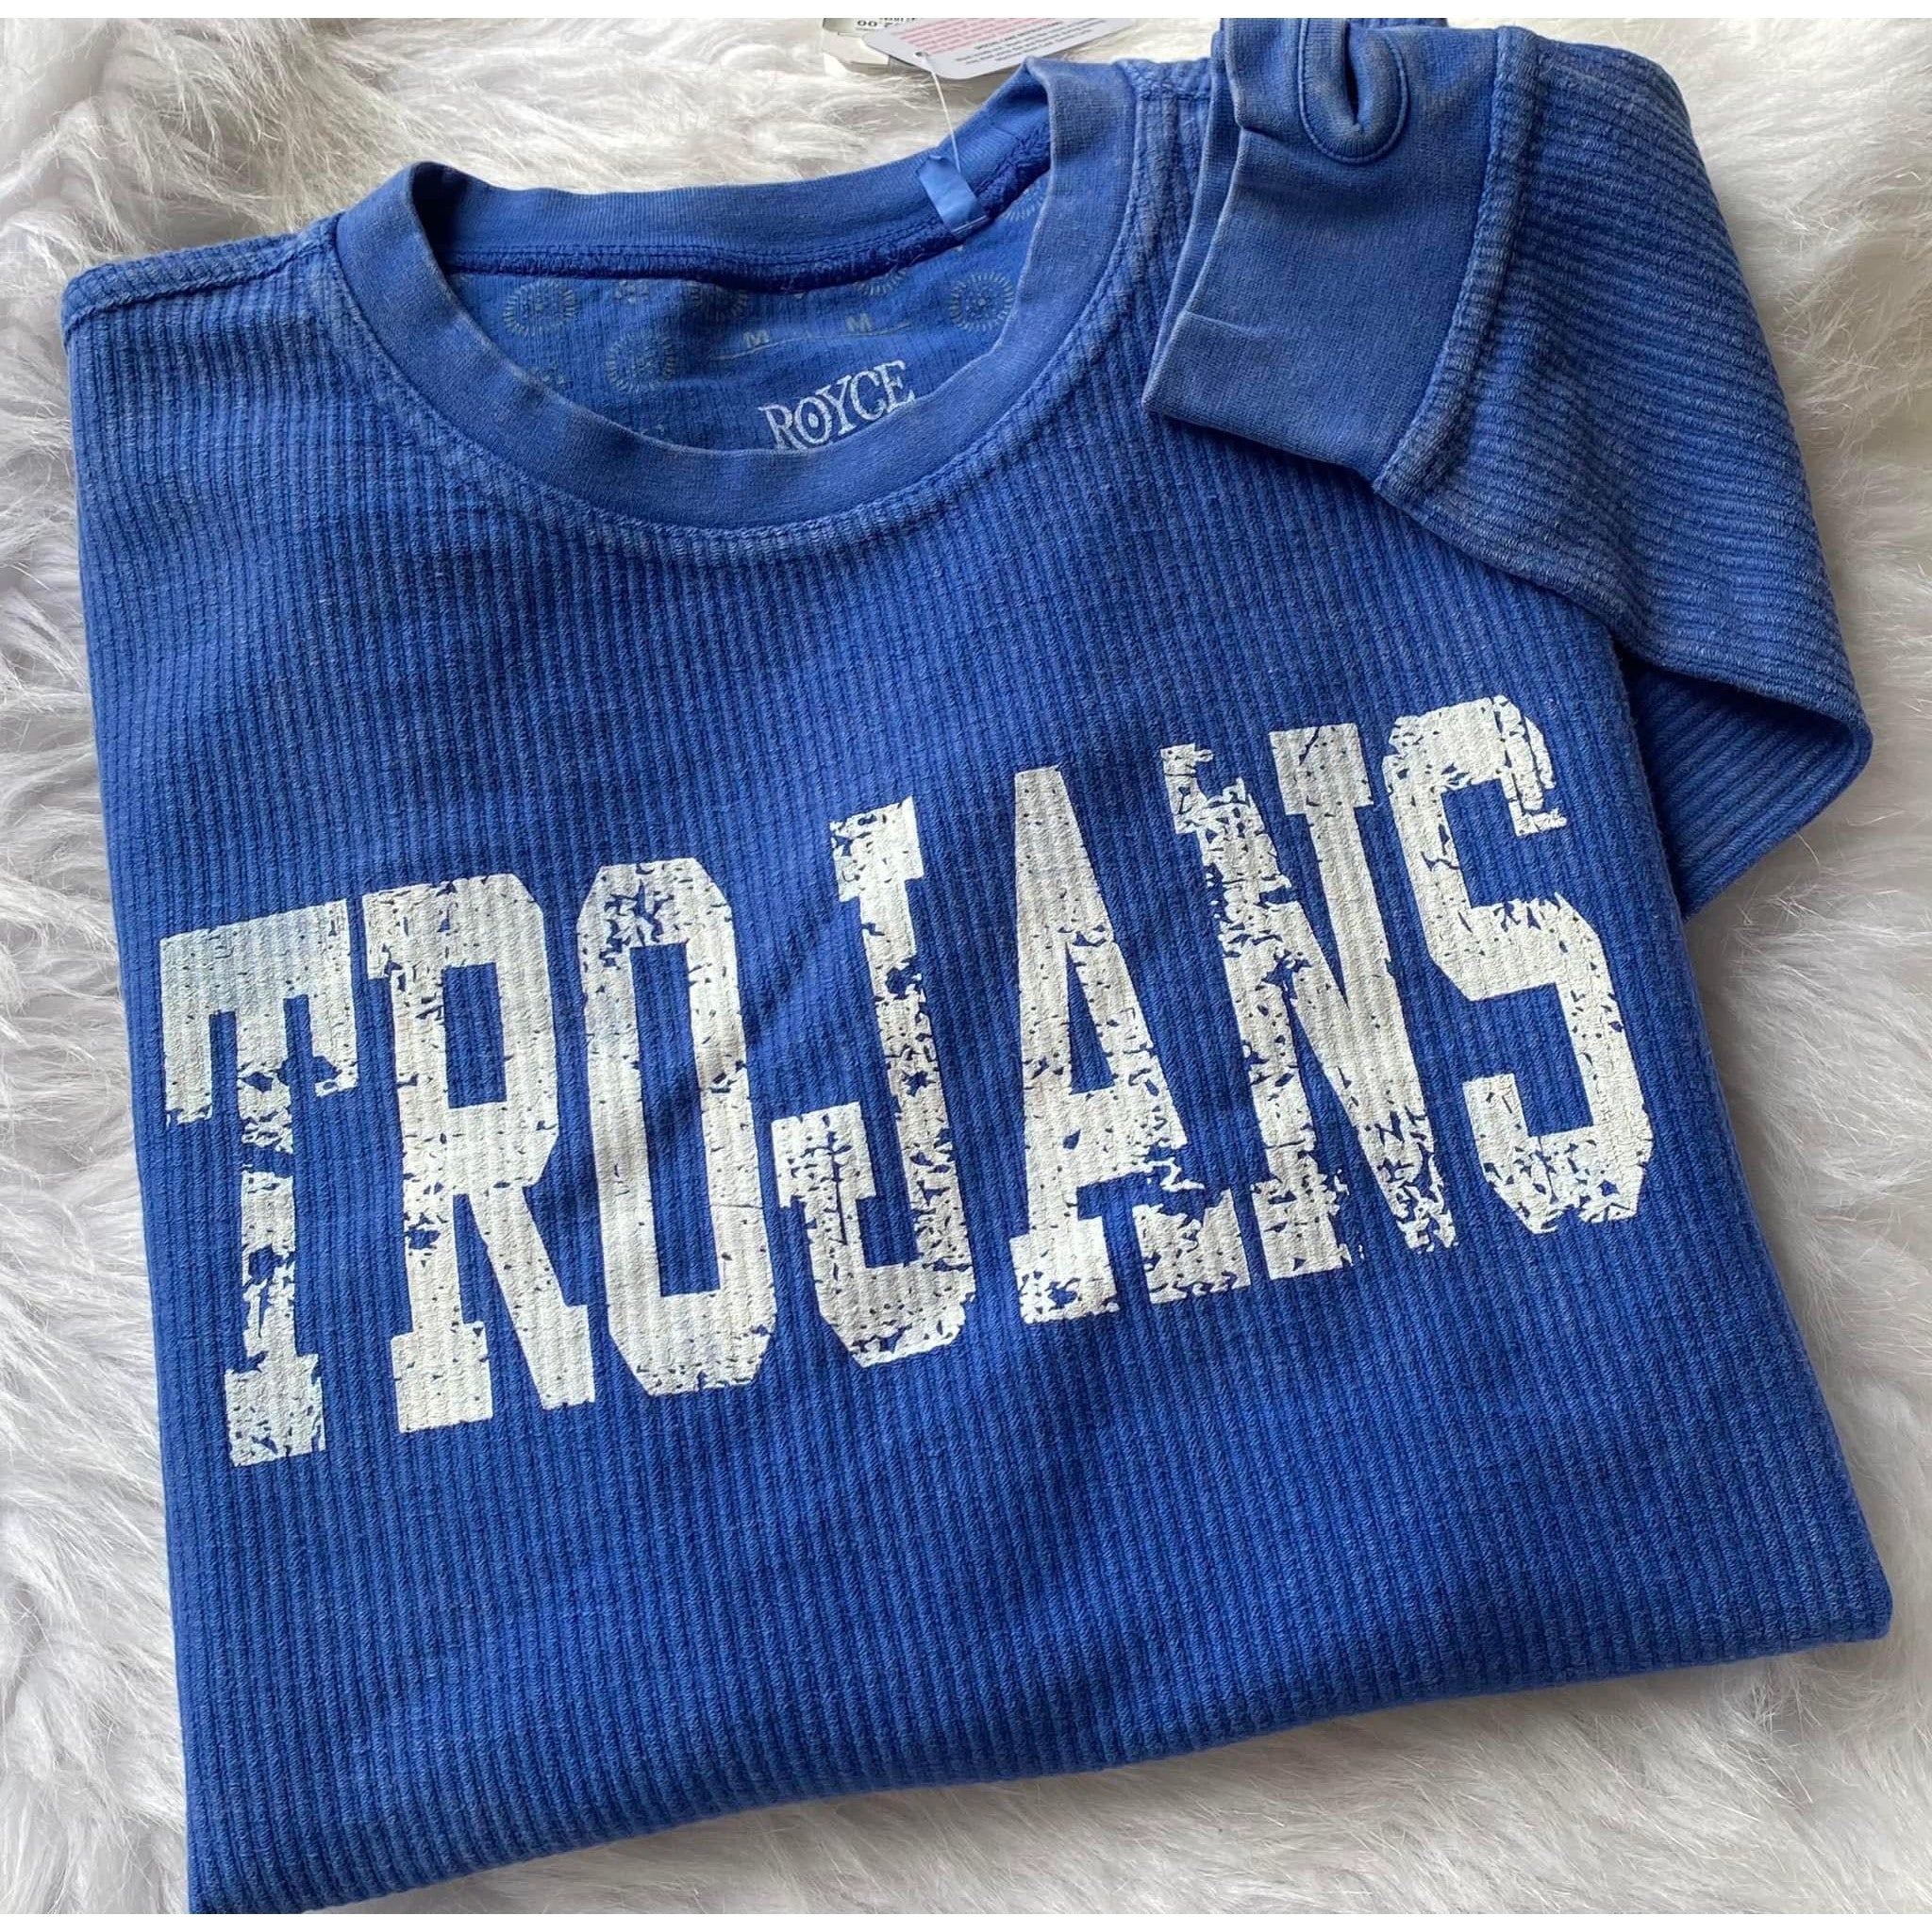 Trojans Corded Sweatshirt